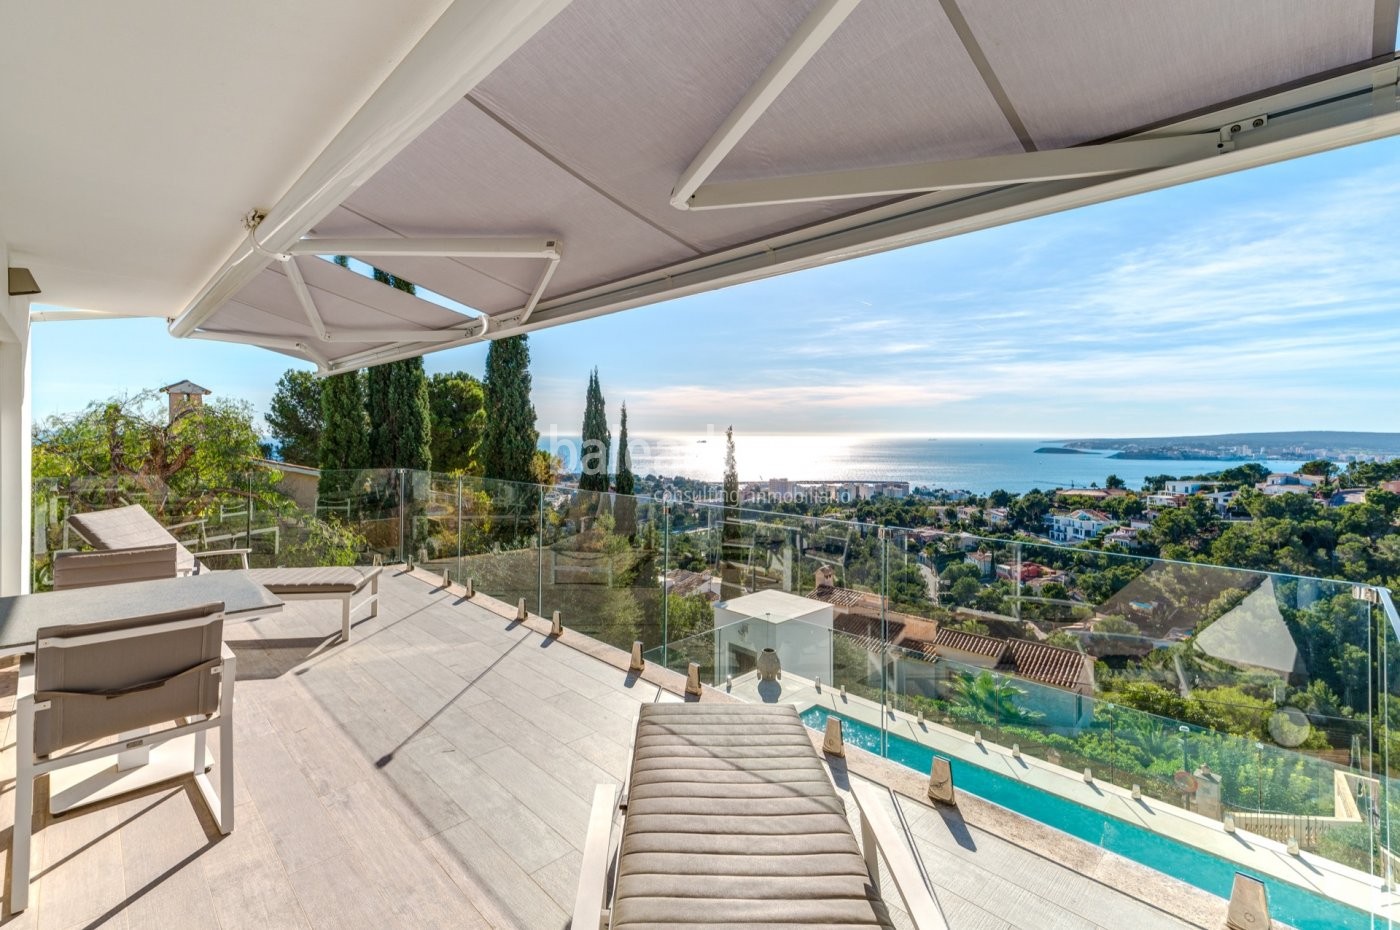 Fabelhafte moderne Design-Villa mit schönem Meerblick in Costa d'en Blanes.